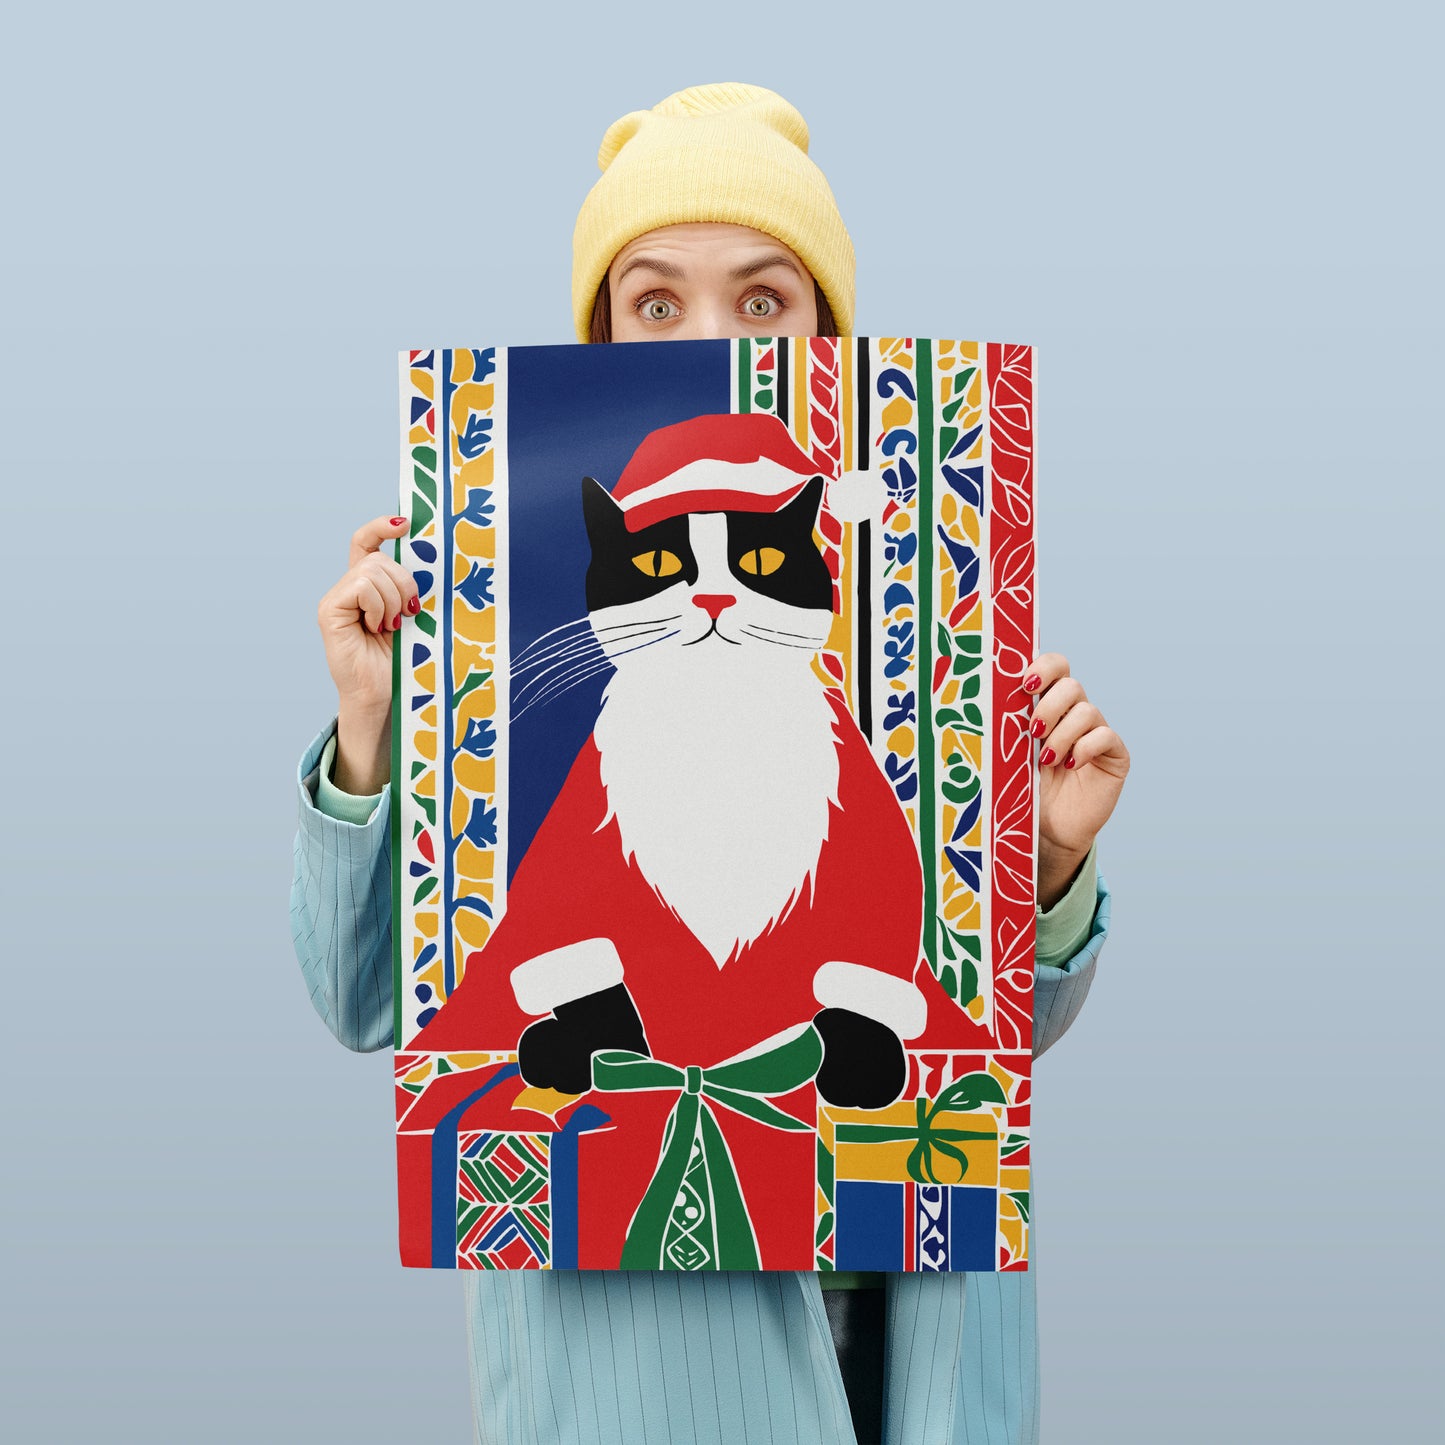 Funny Santa Cat Poster